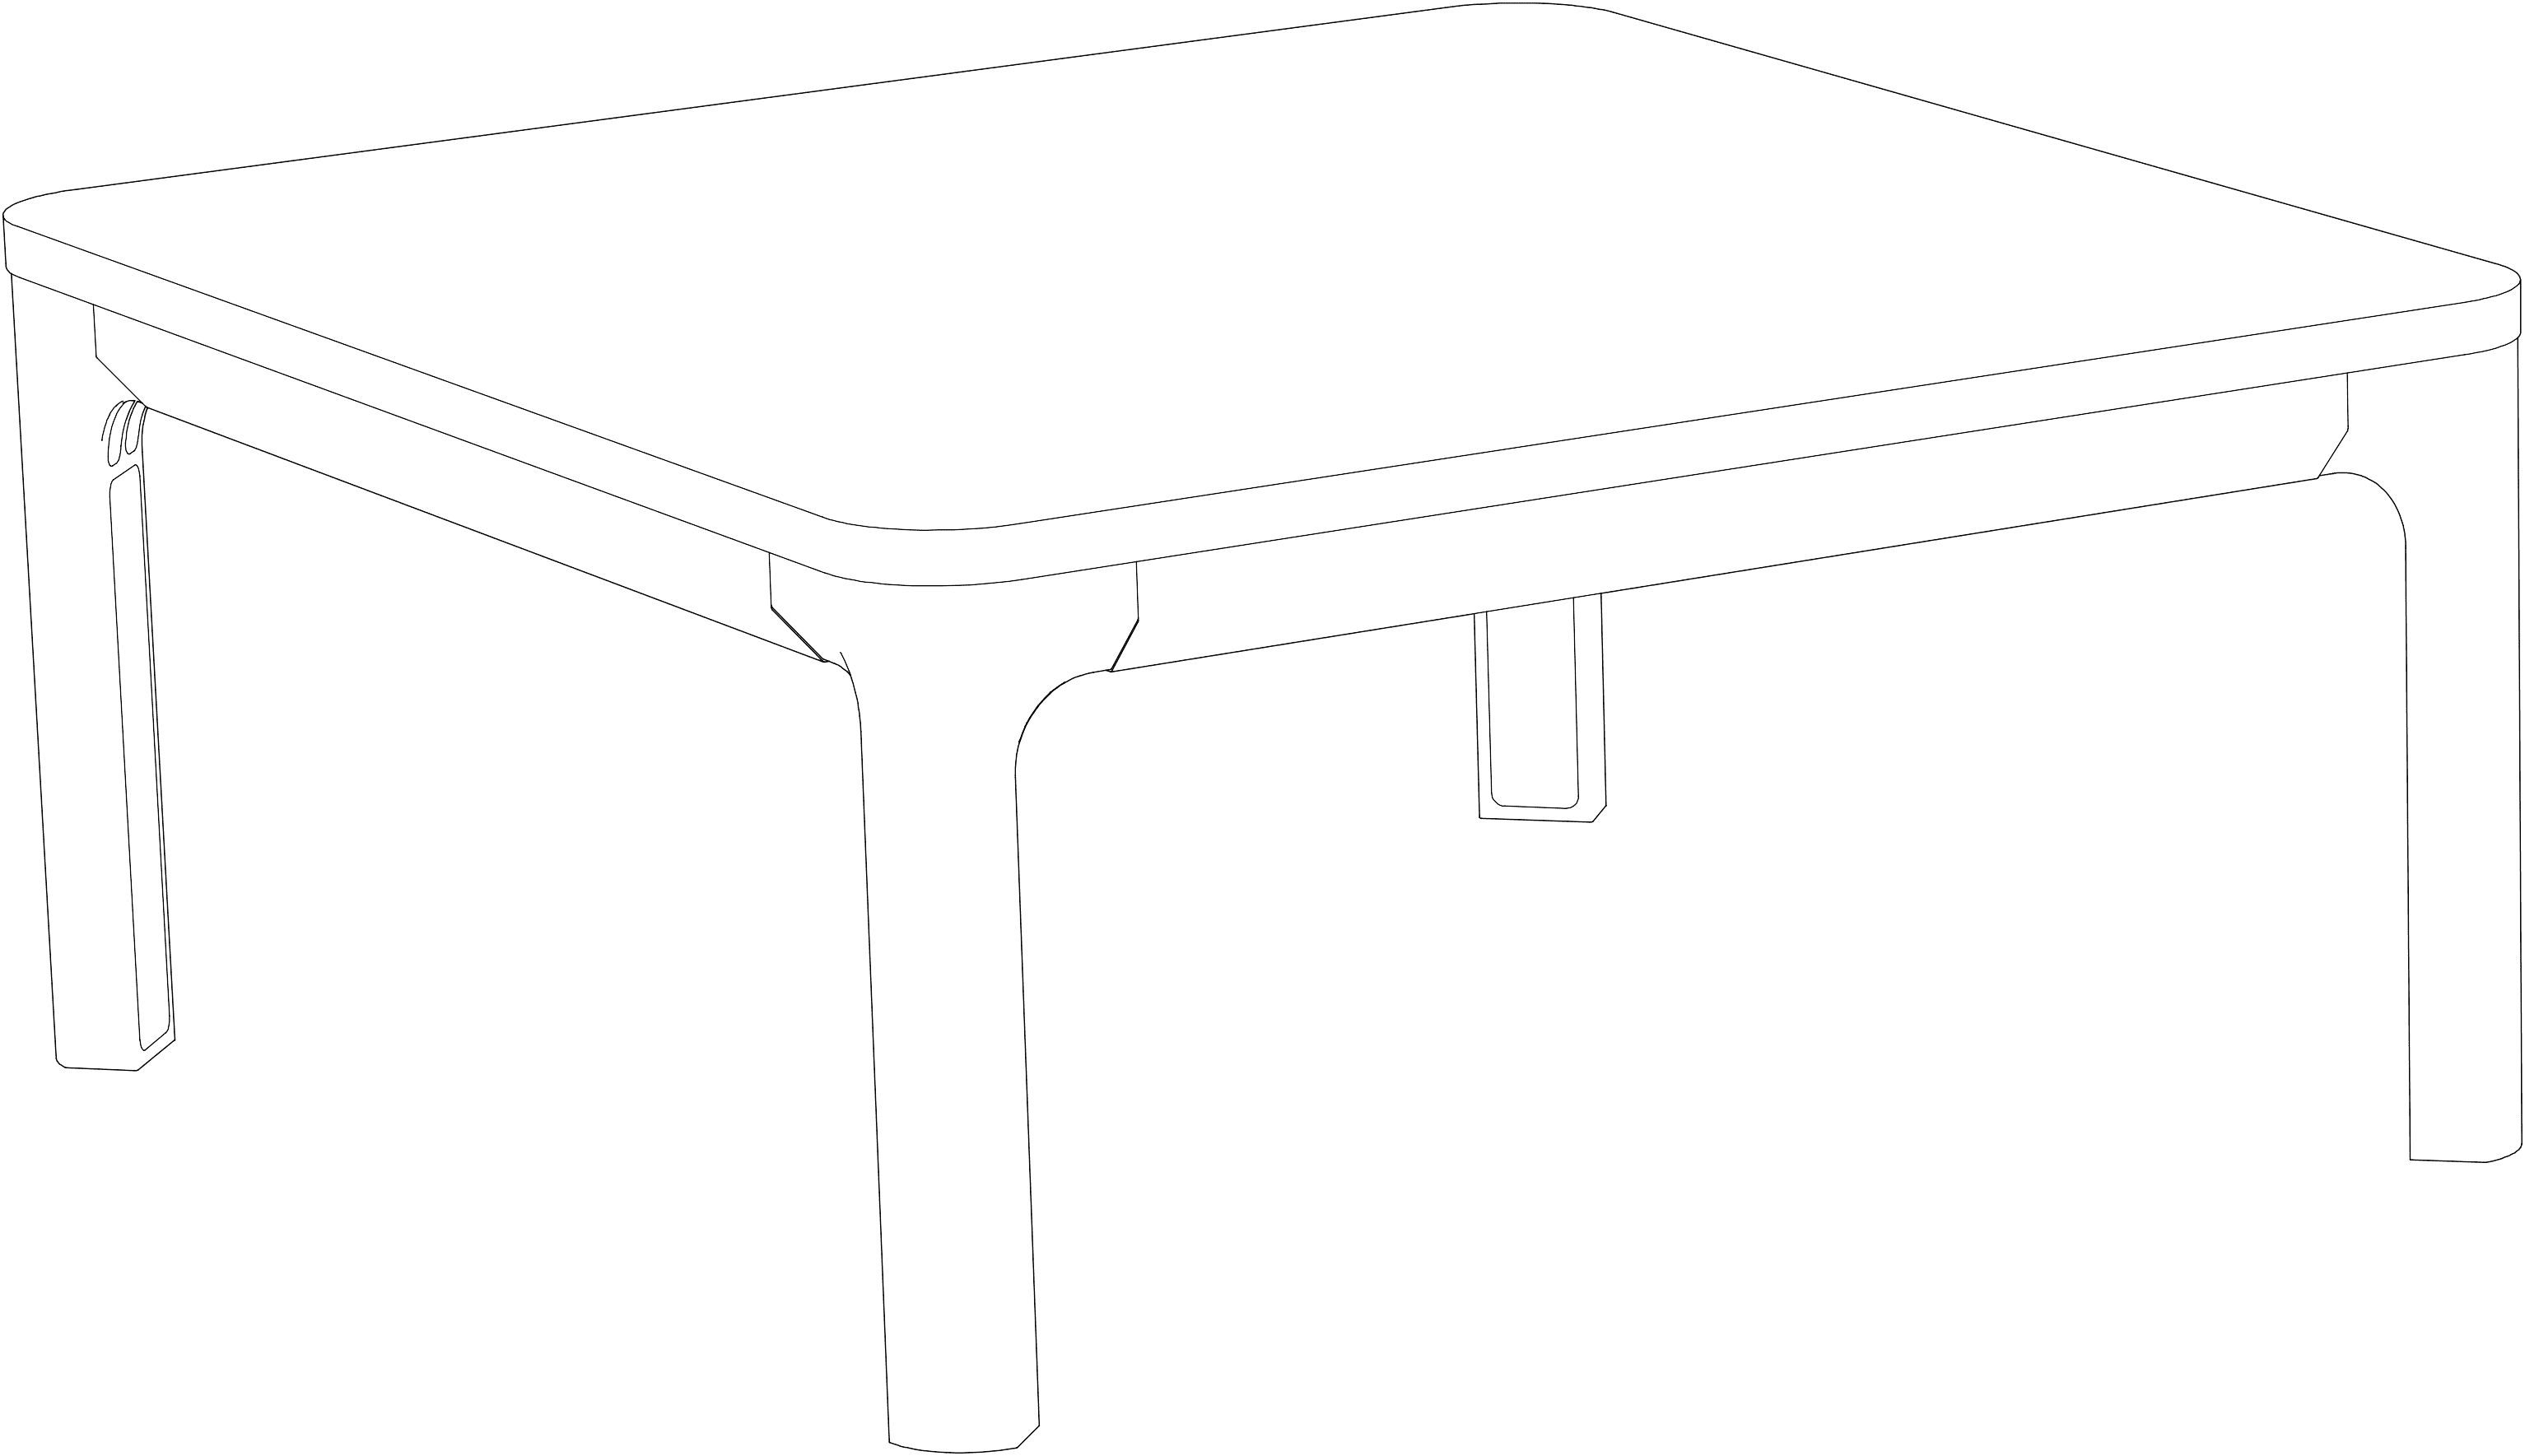 Button Table